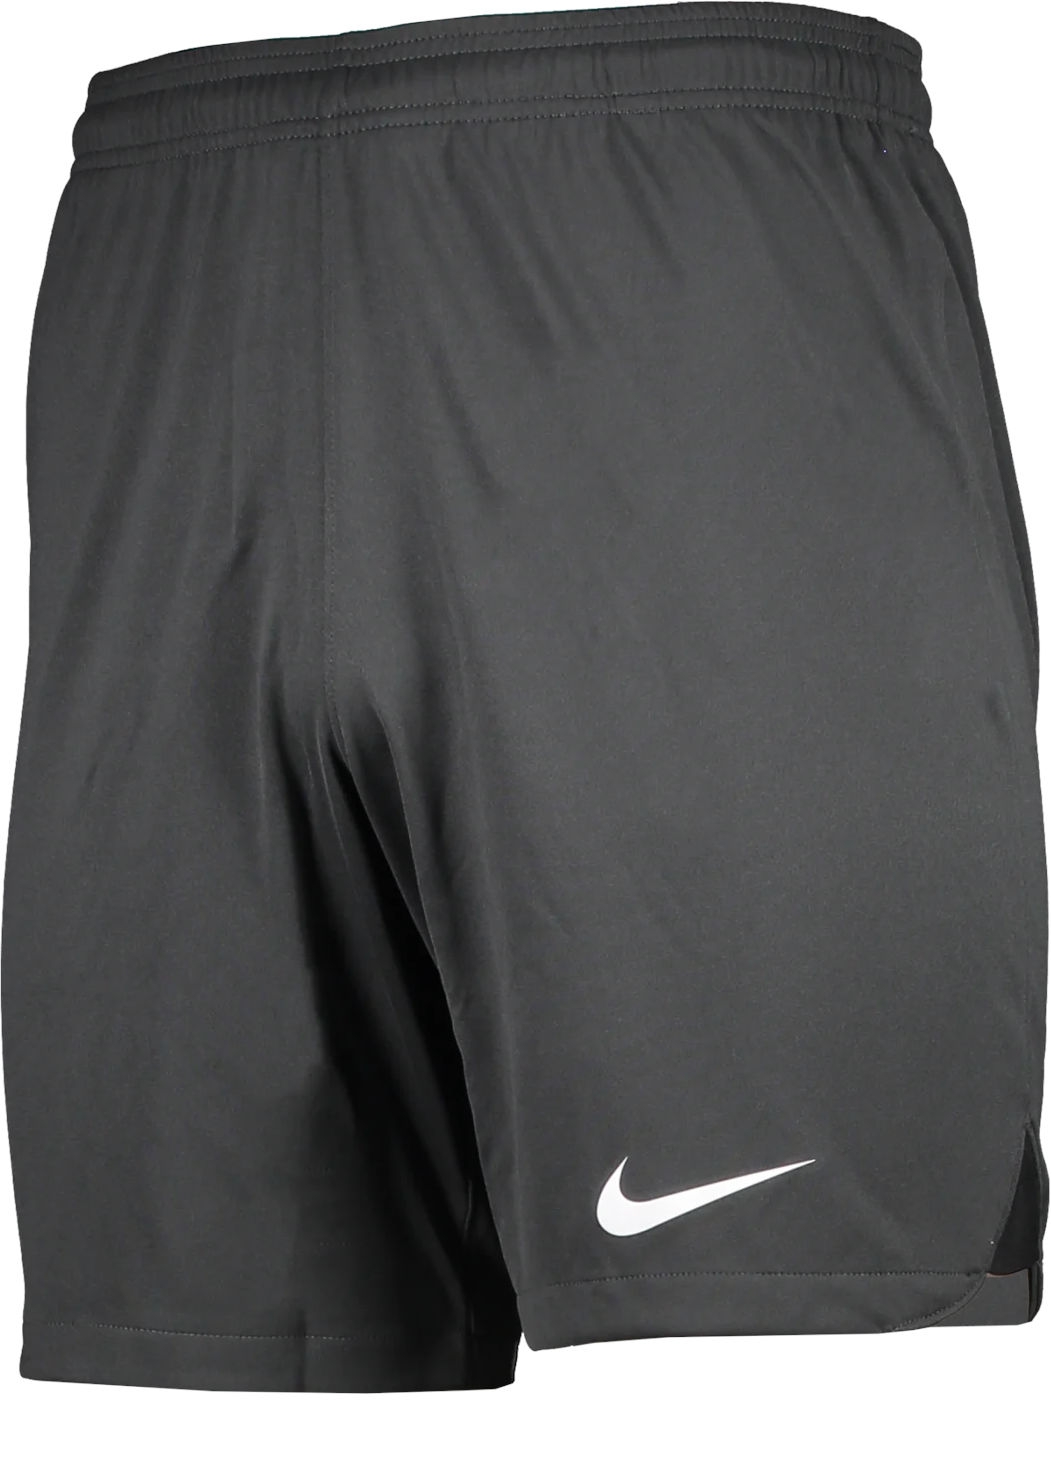 Šortky Nike Foundation Goalkeeper Shorts